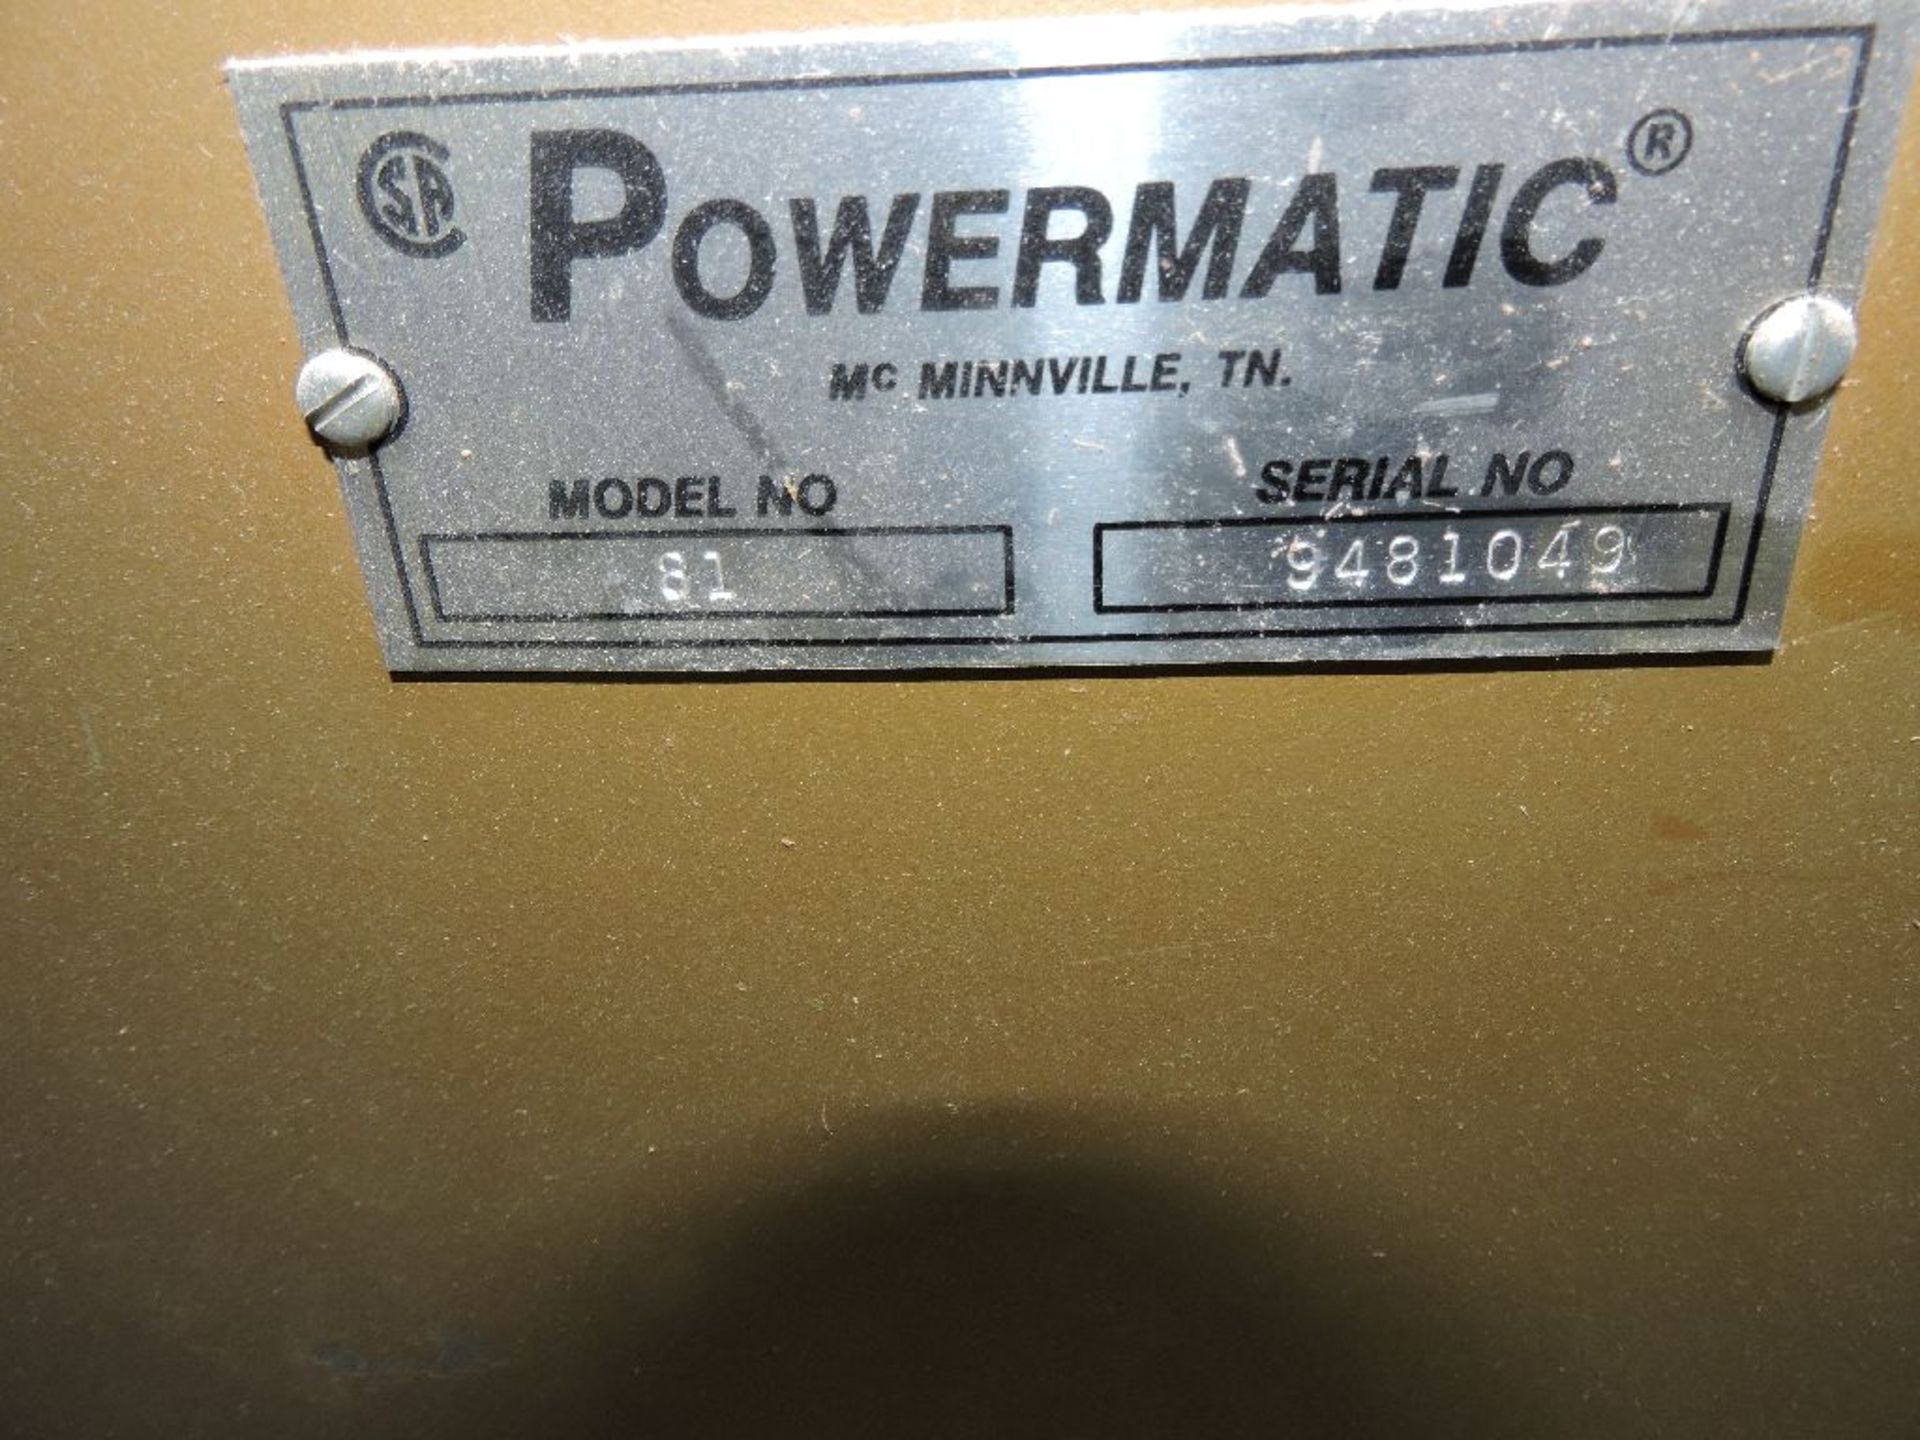 Powermatic bandsaw, model 81, sn 9481049, 20", voltage 230/460. - Image 5 of 5